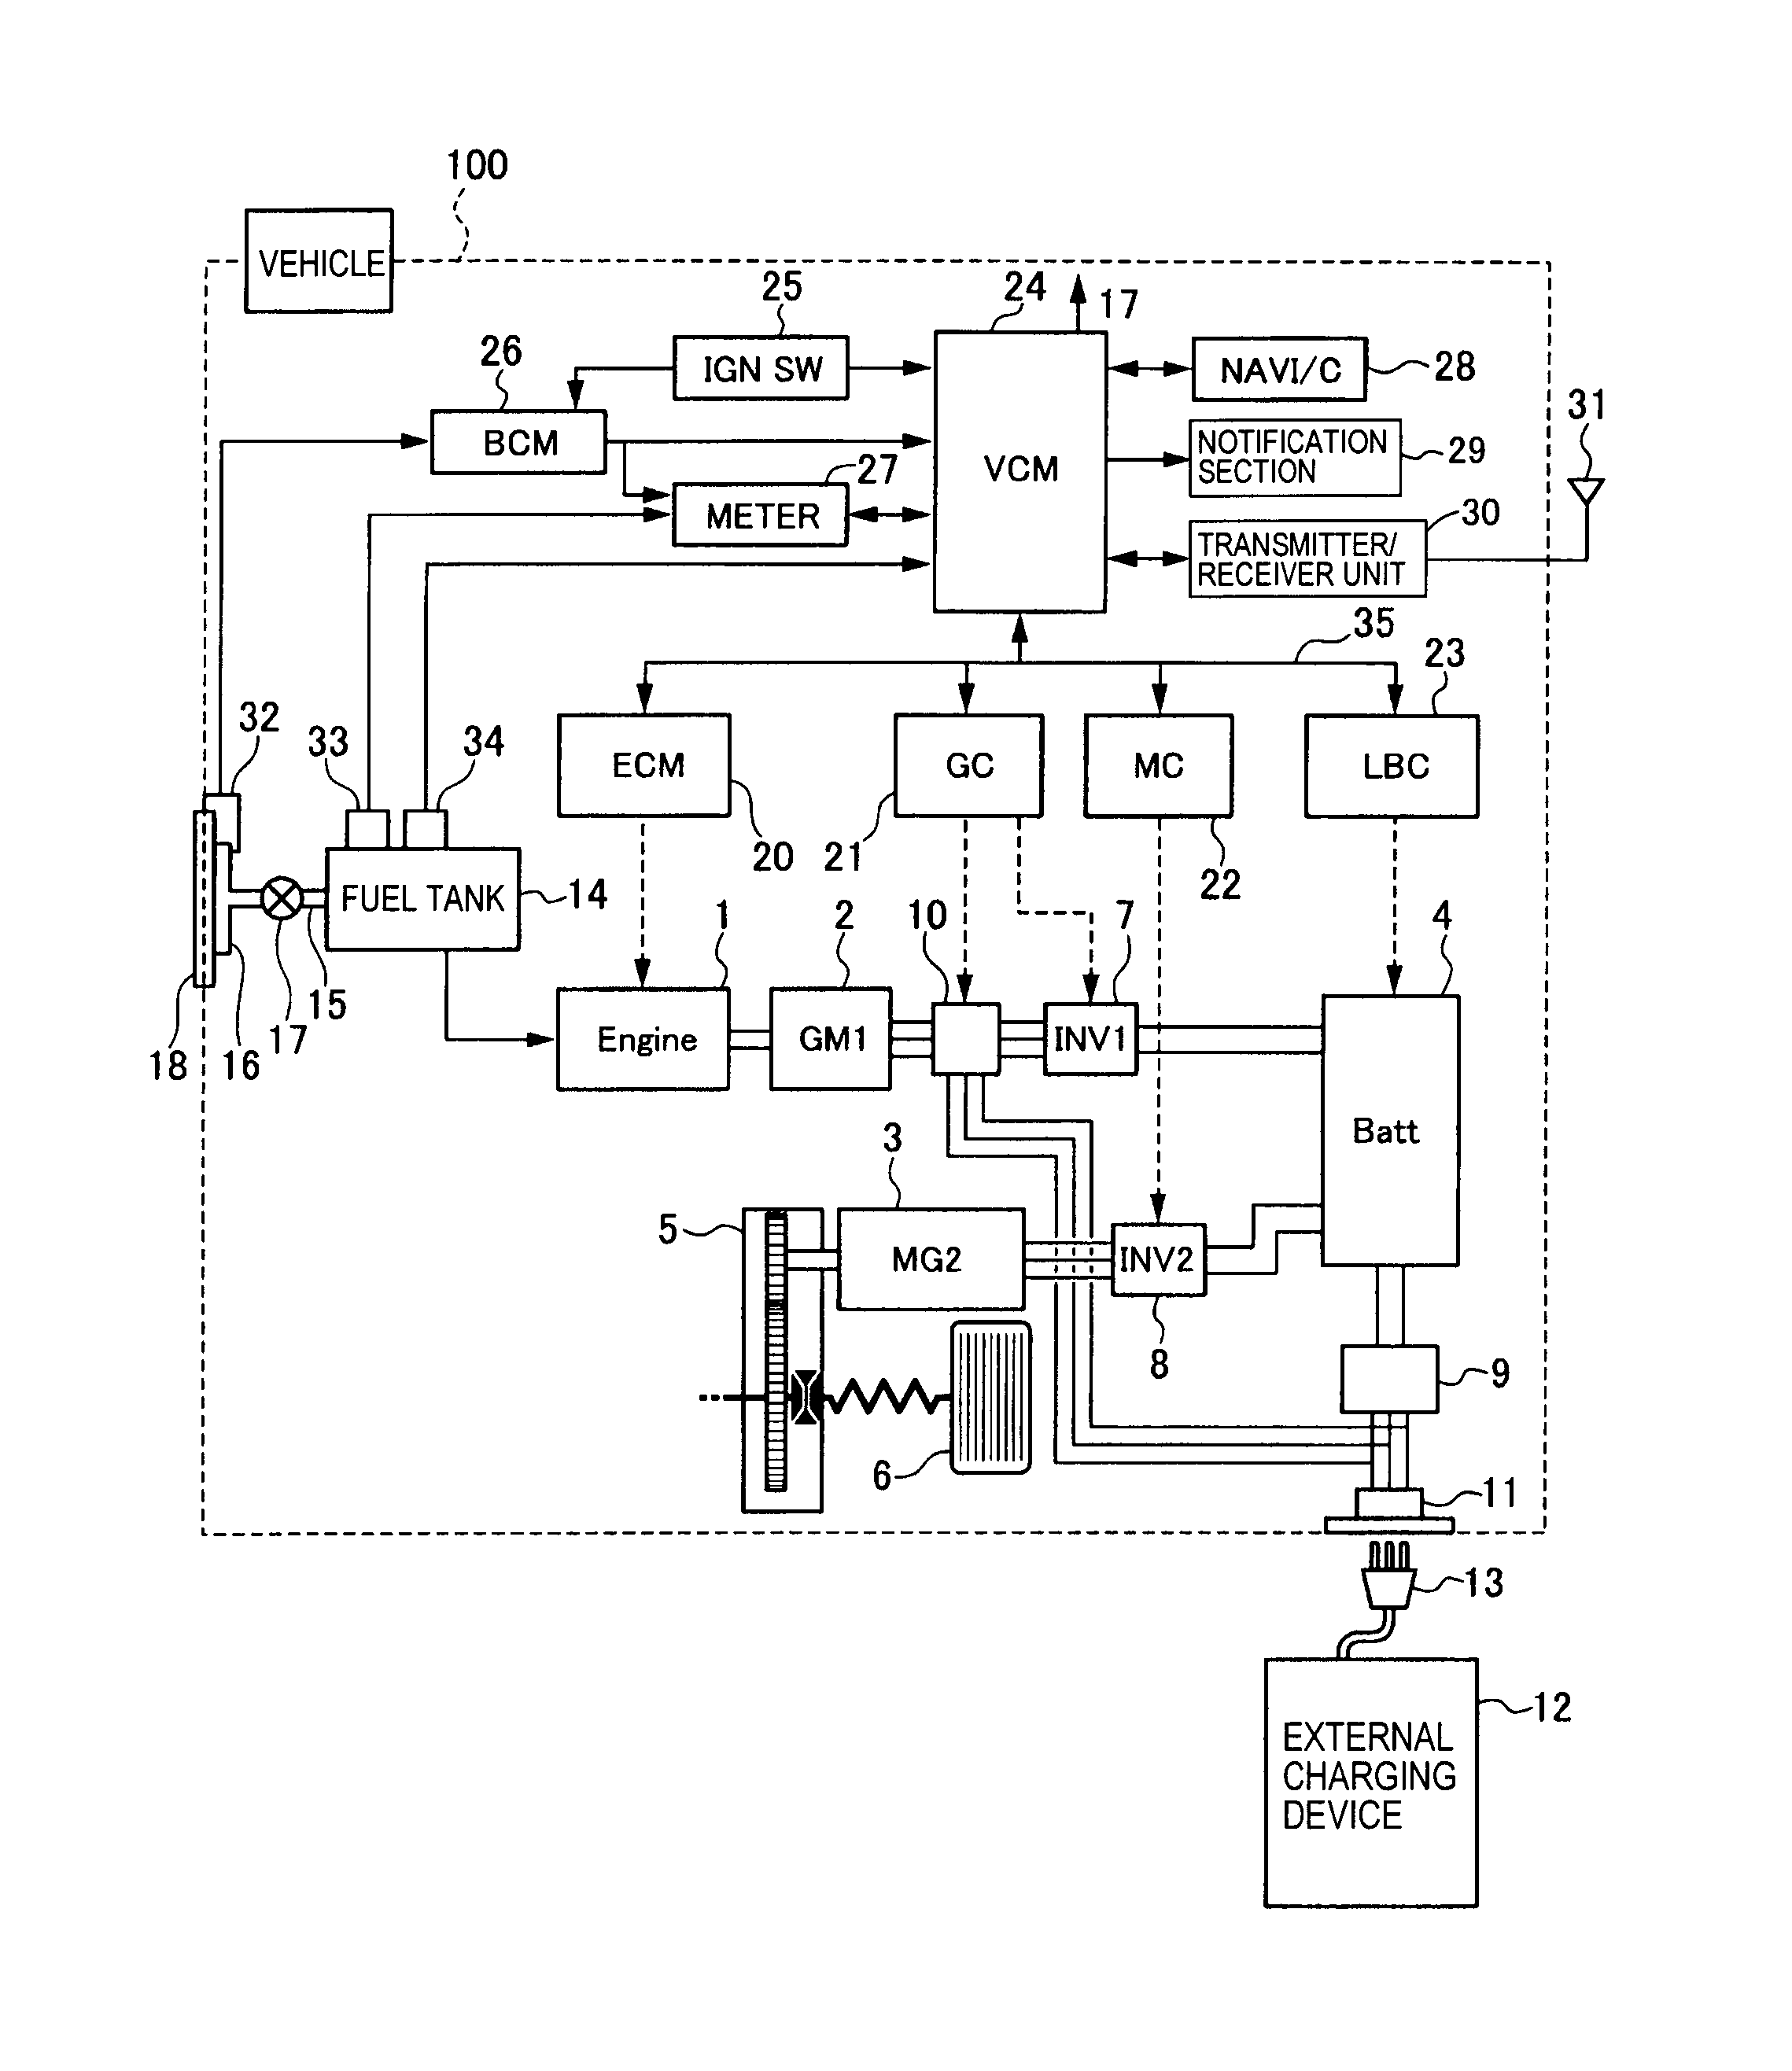 dm2652 wiring diagram